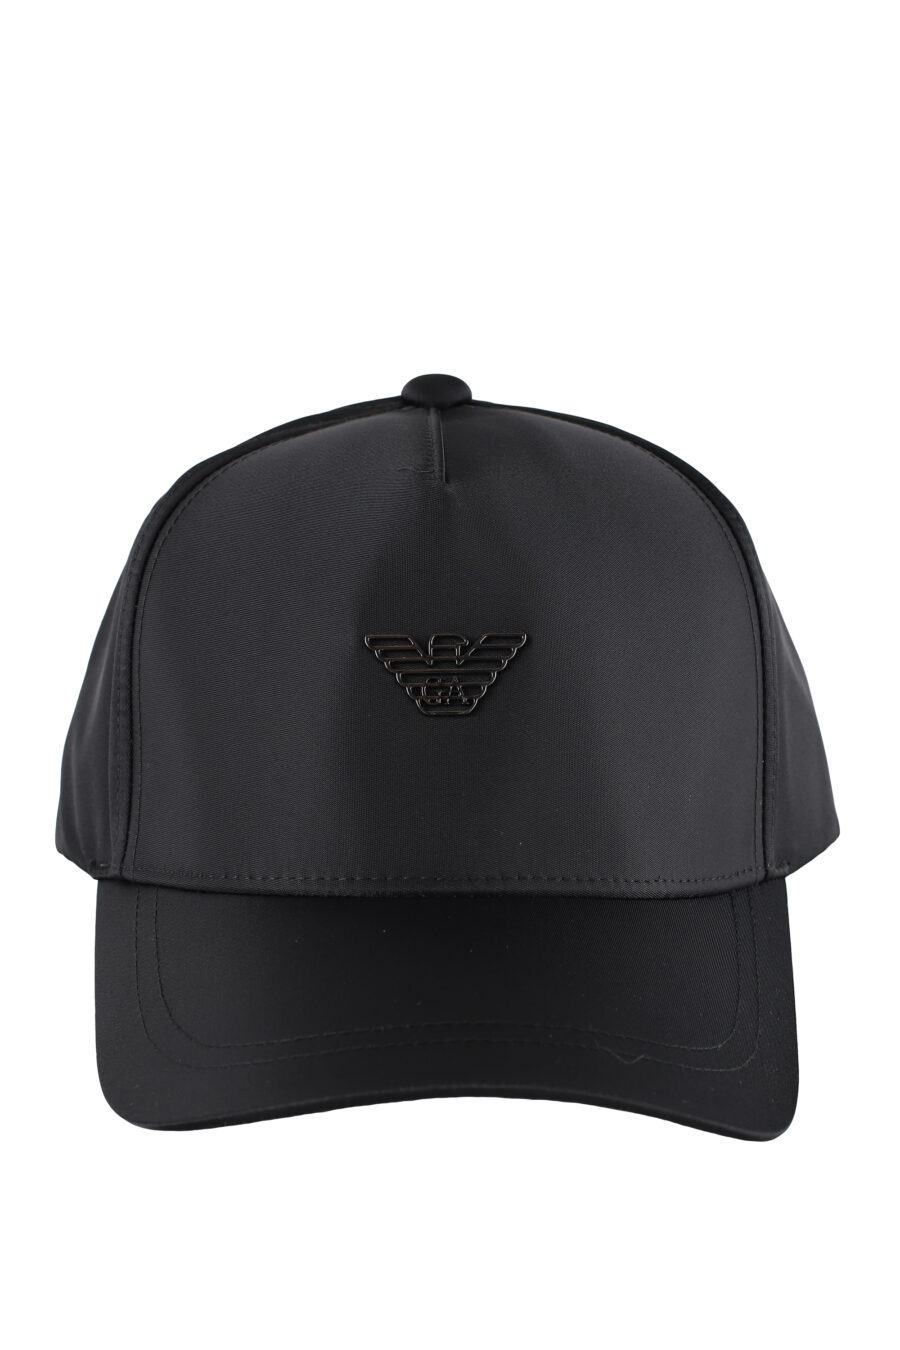 Black cap with metal eagle logo - IMG 5176